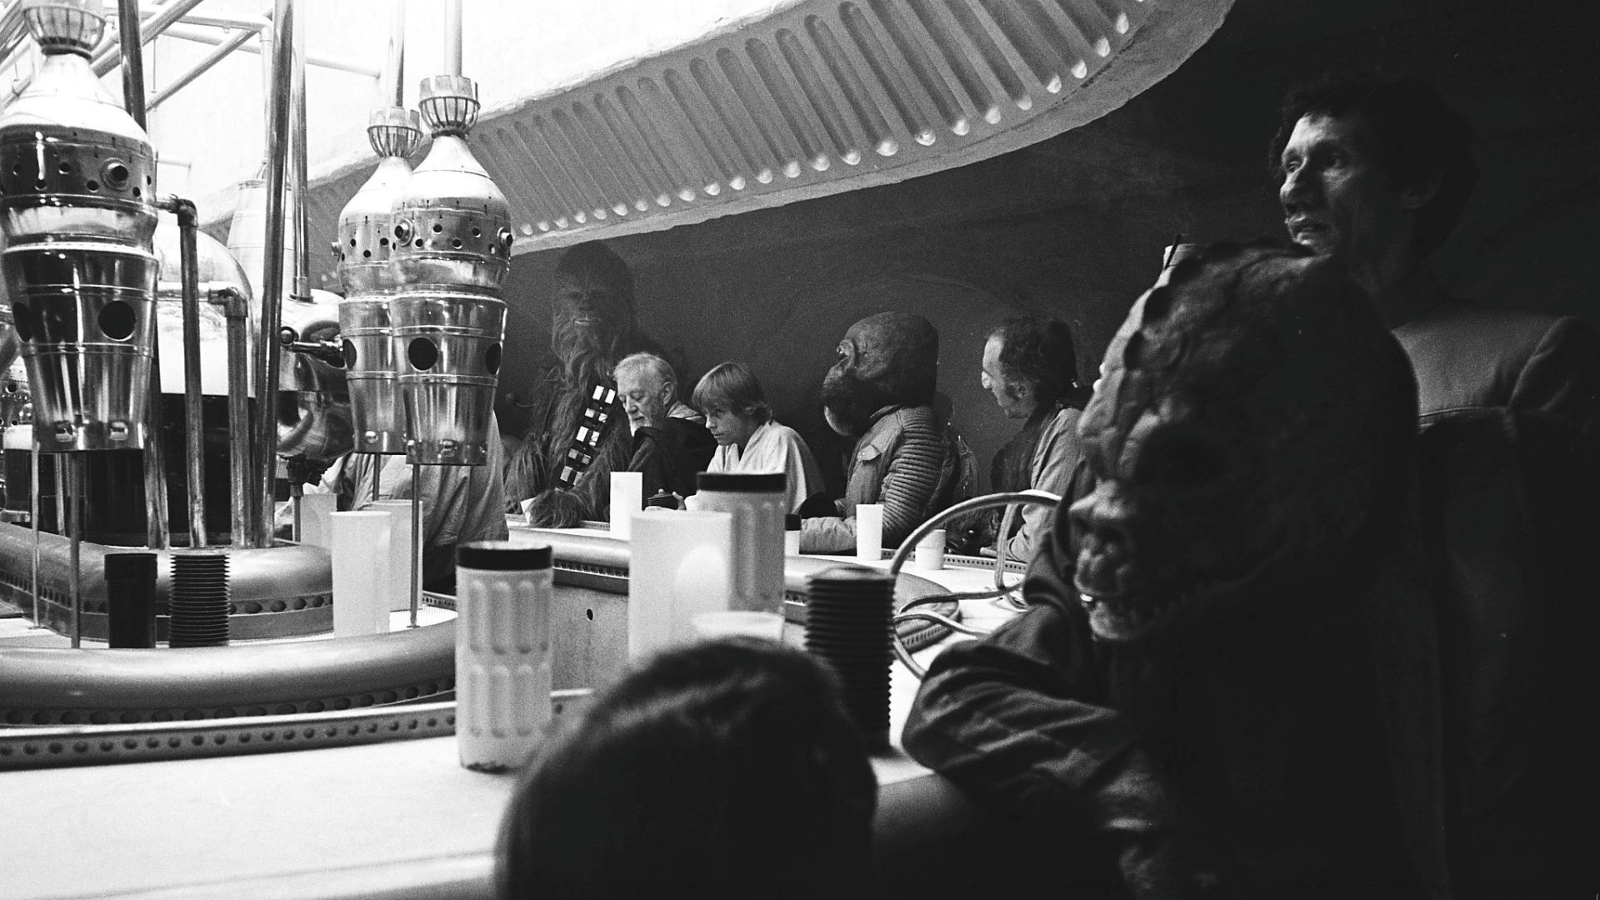 People 1600x900 Star Wars Tatooine Mos Eisley Cantina Luke Skywalker Obi-Wan Kenobi Chewbacca A New Hope Film set movies monochrome science fiction